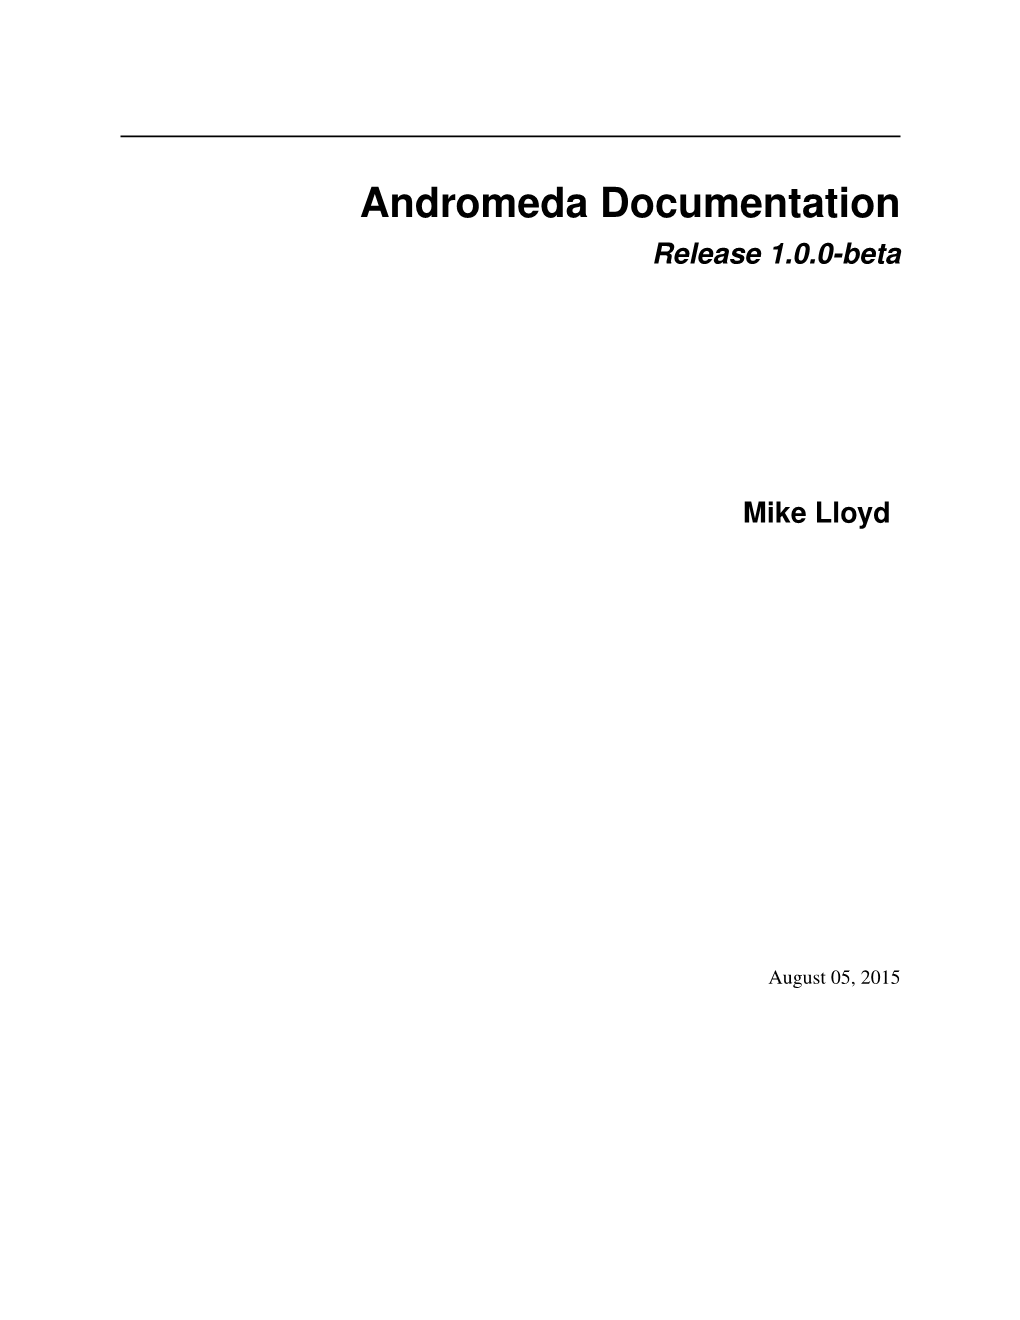 Andromeda Documentation Release 1.0.0-Beta